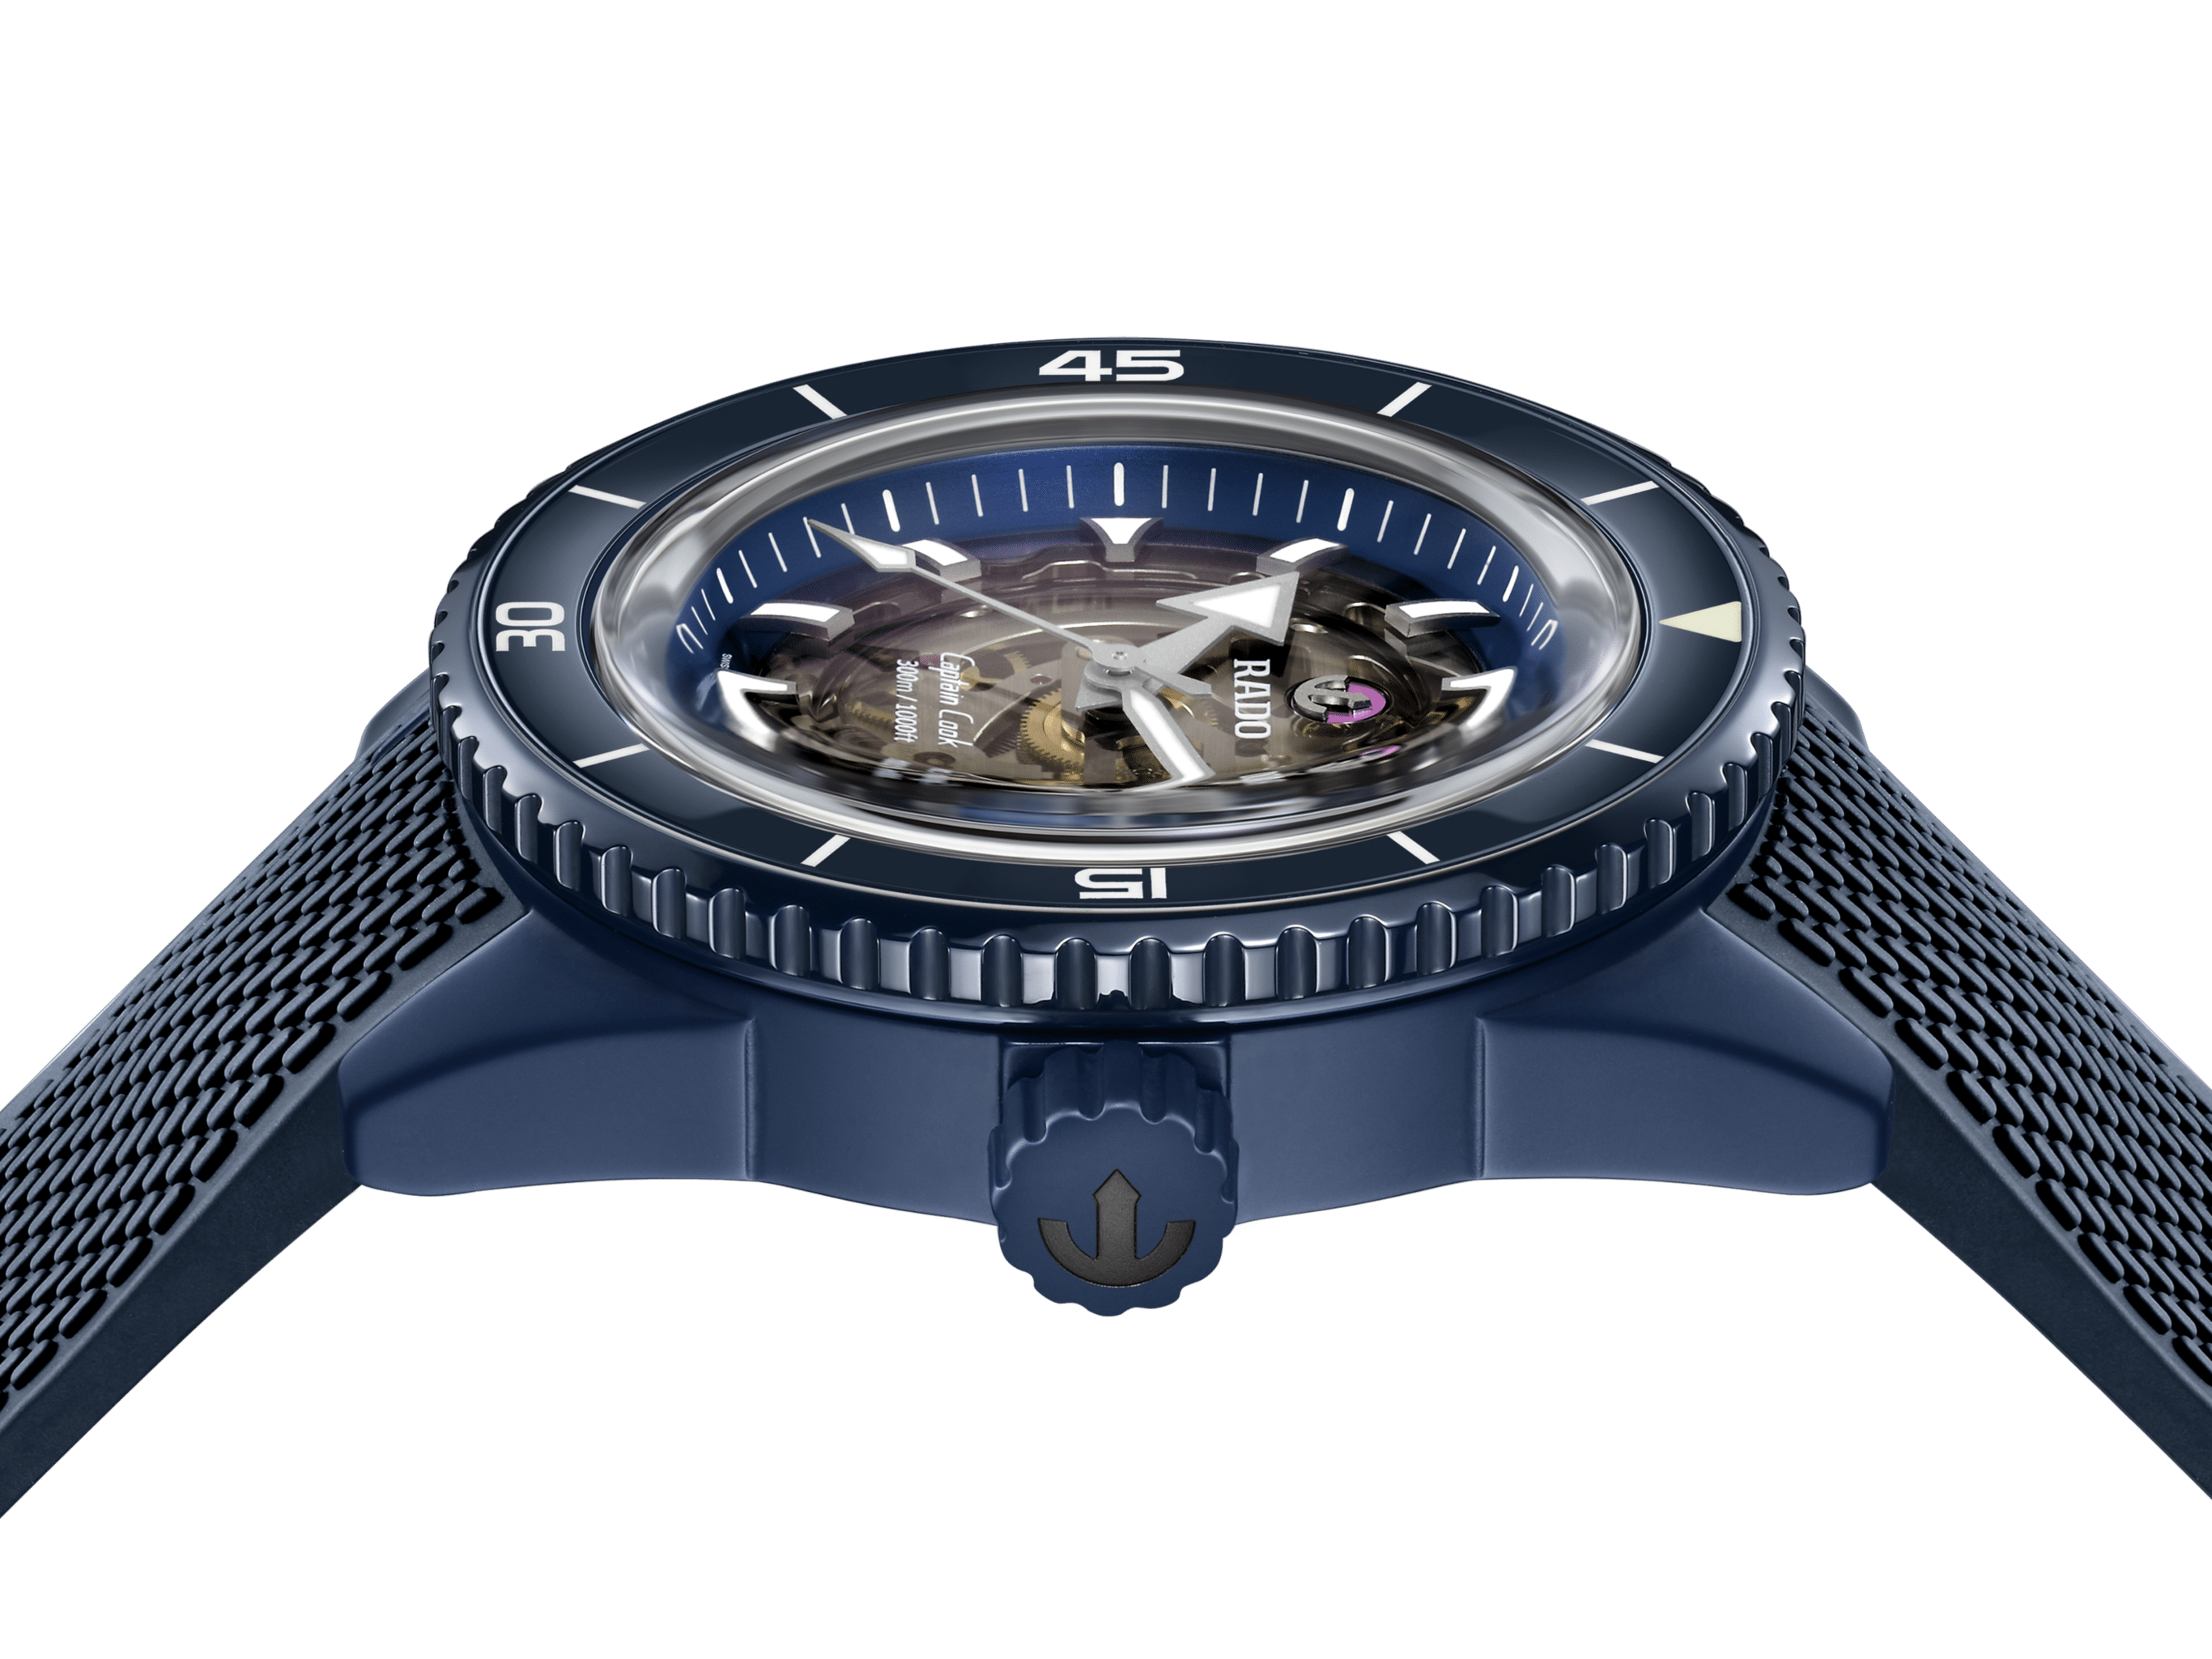 RADO Captain Cook Matte Navy Blue High-Tech Ceramic 43mm Men's Watch R32153209